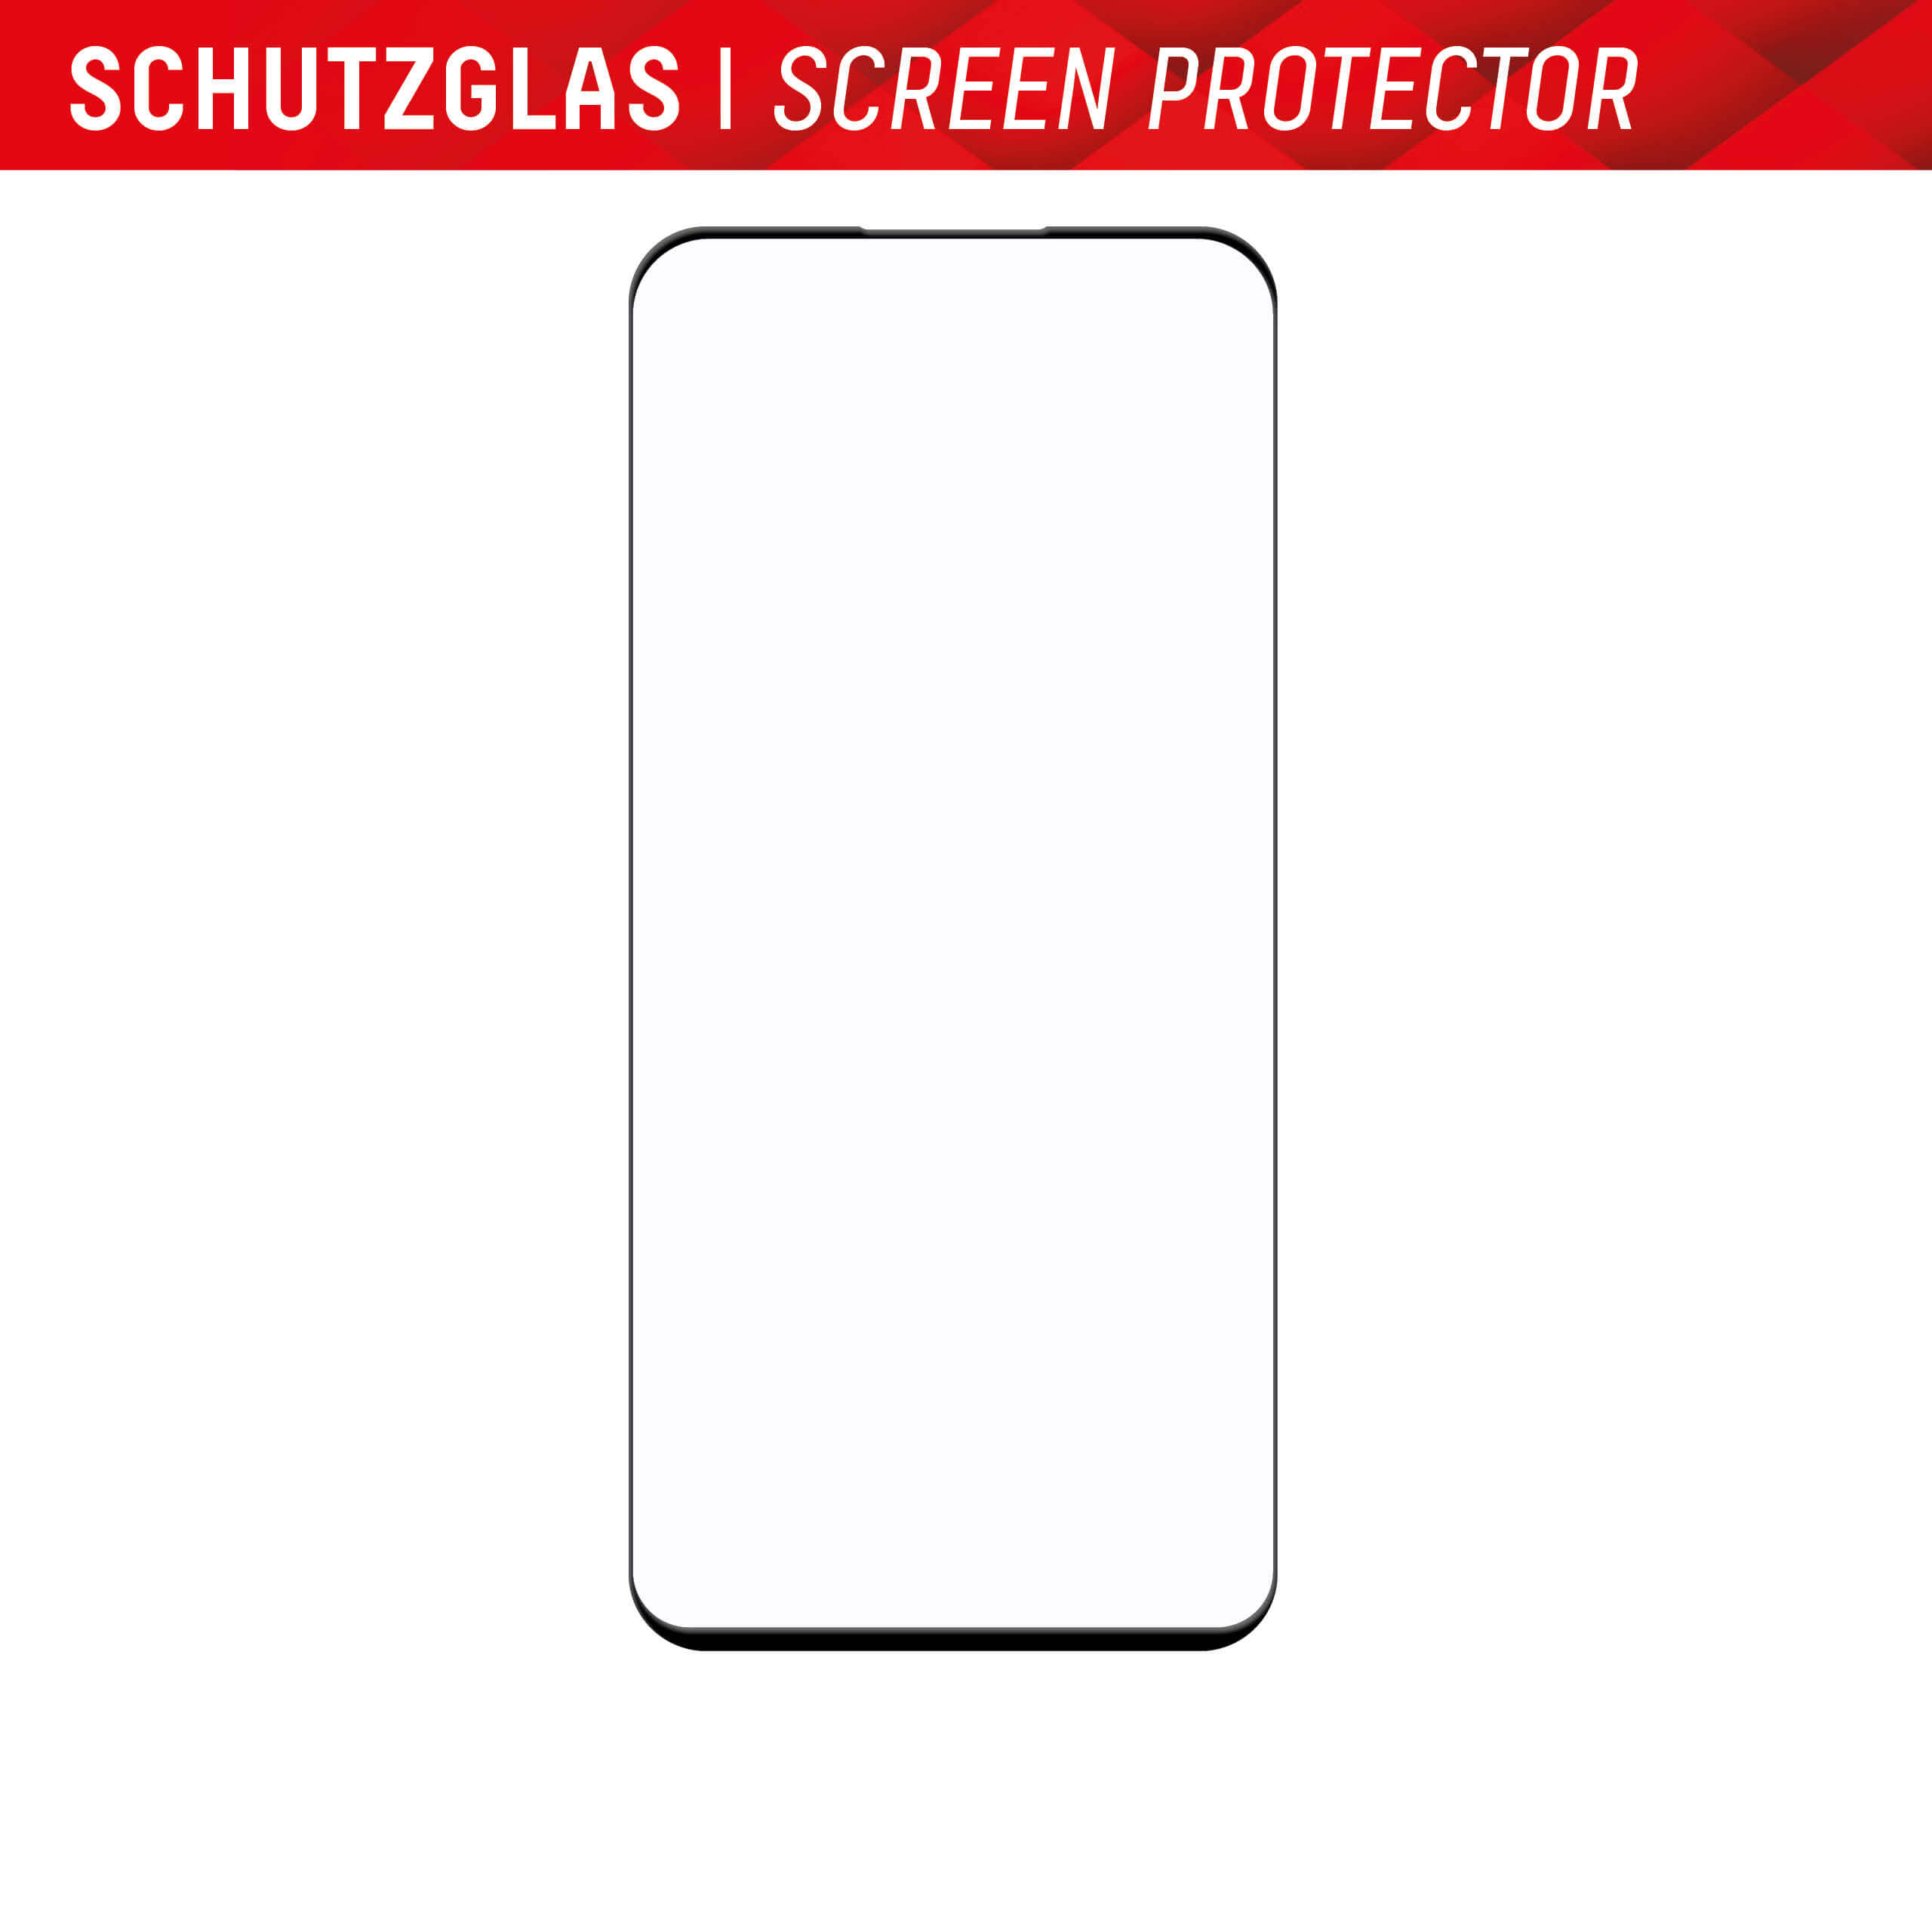 DISPLEX Full Cover Glas für Xiaomi 12 Lite 5G NE